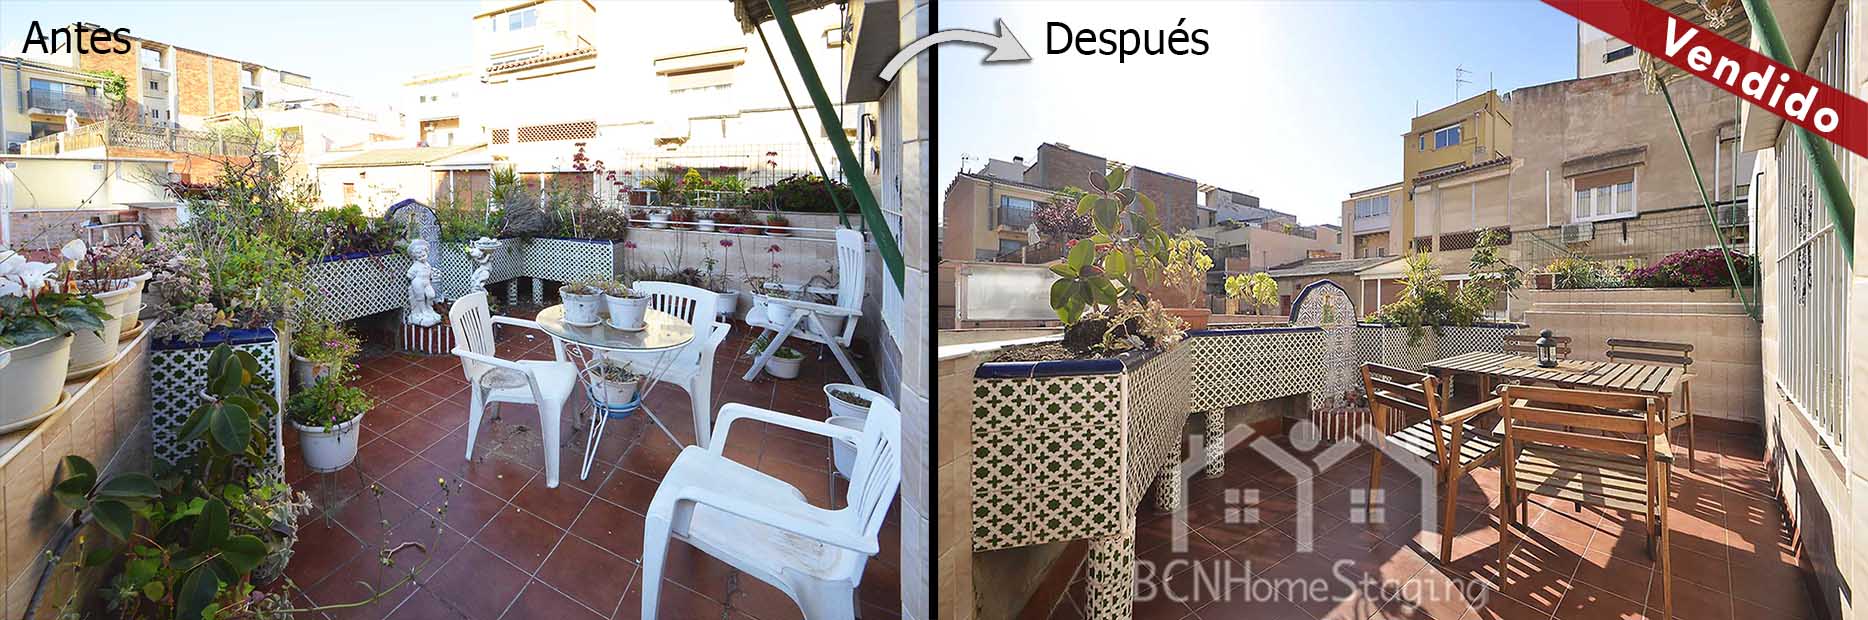 home-staging-barcelona-exterior-terrassa-antes-despues